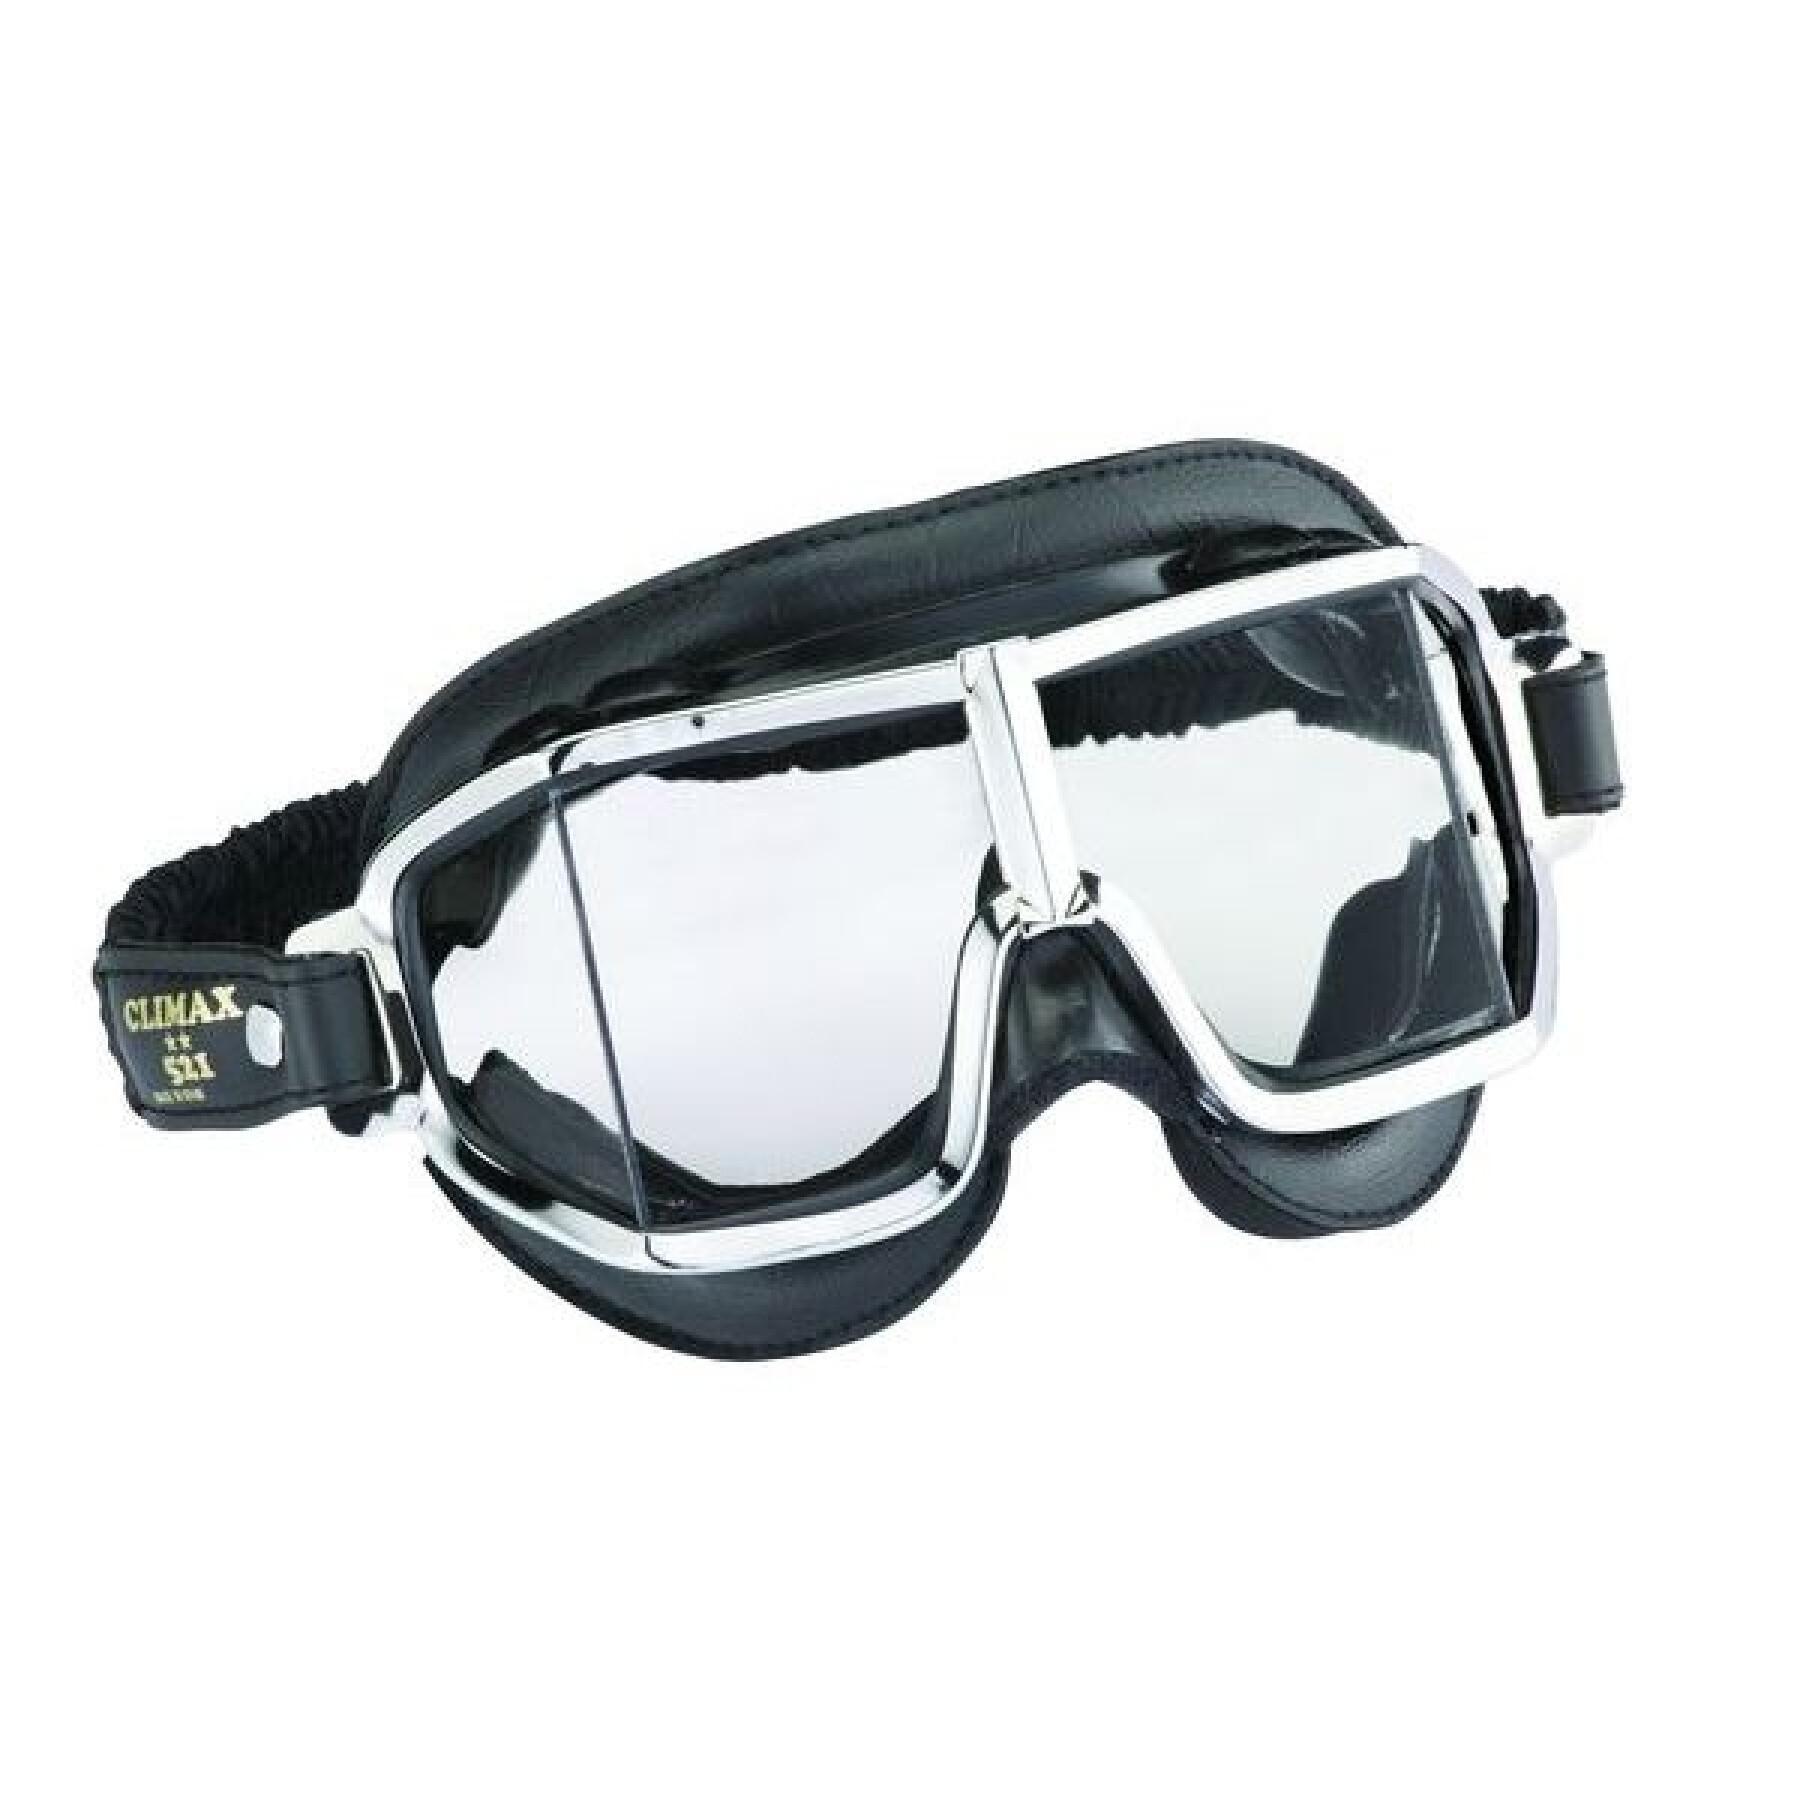 Motorbike goggles genius skin Climax 521